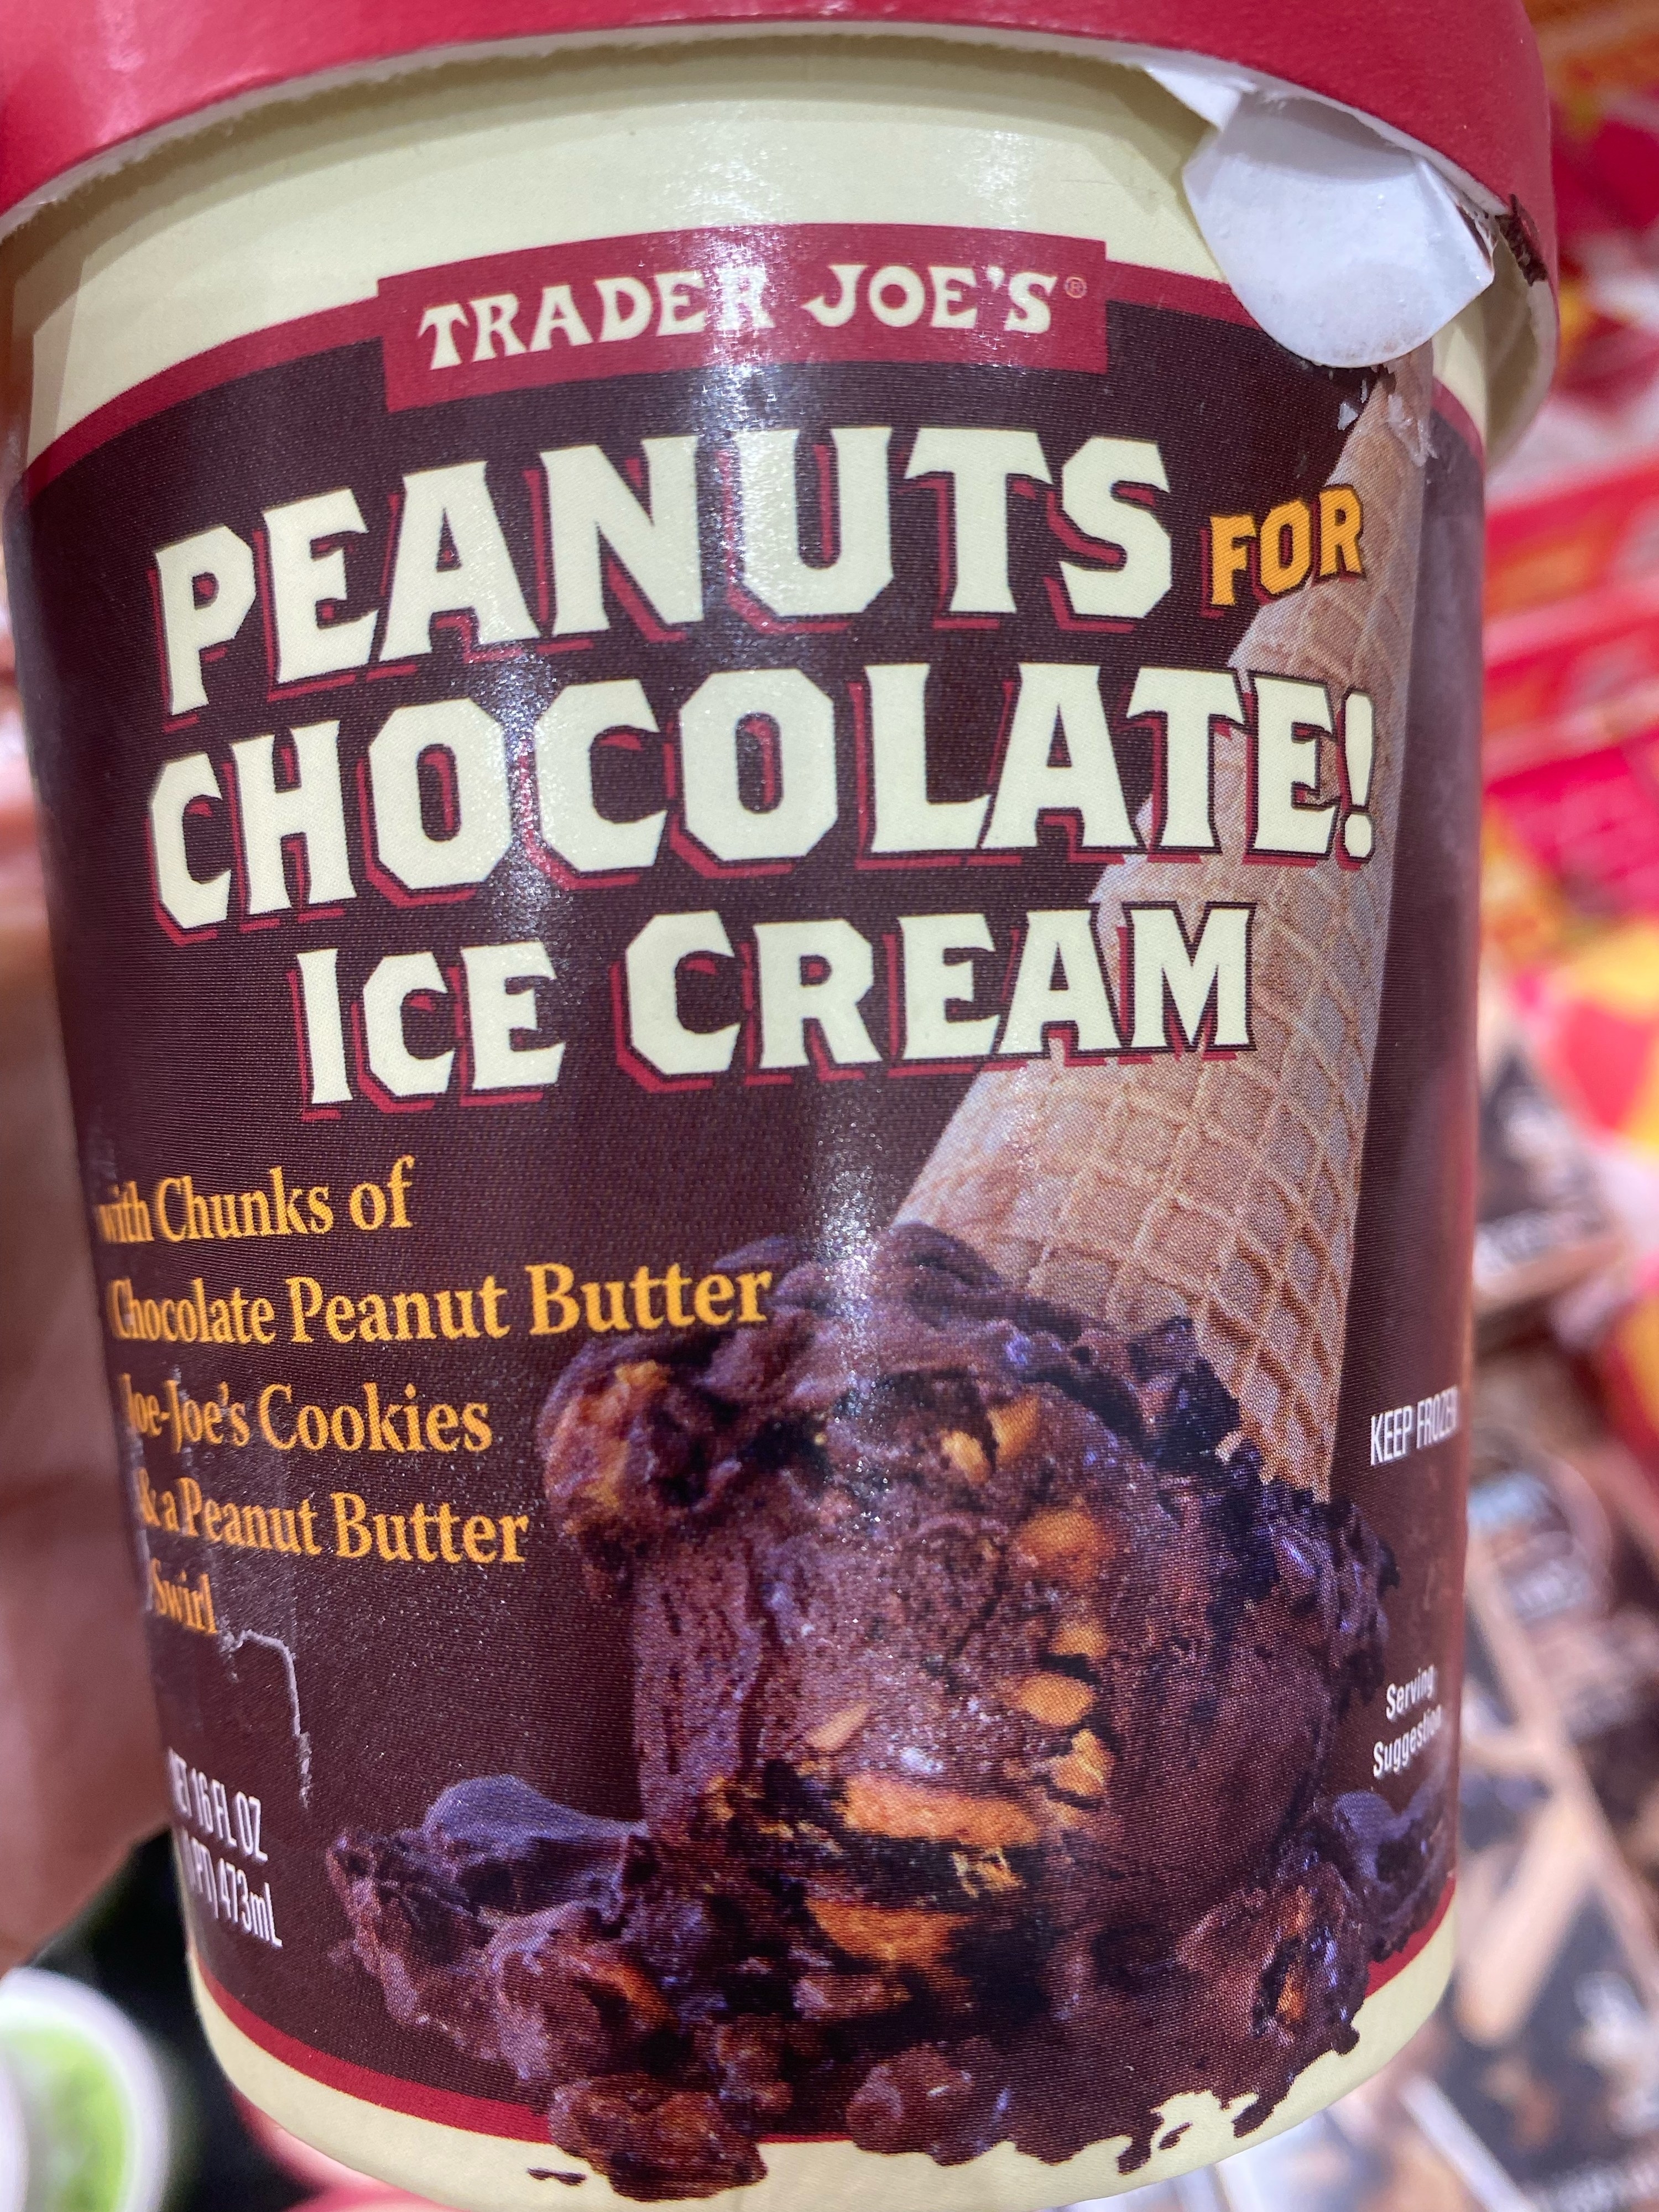 Peanuts For Chocolate! Ice Cream